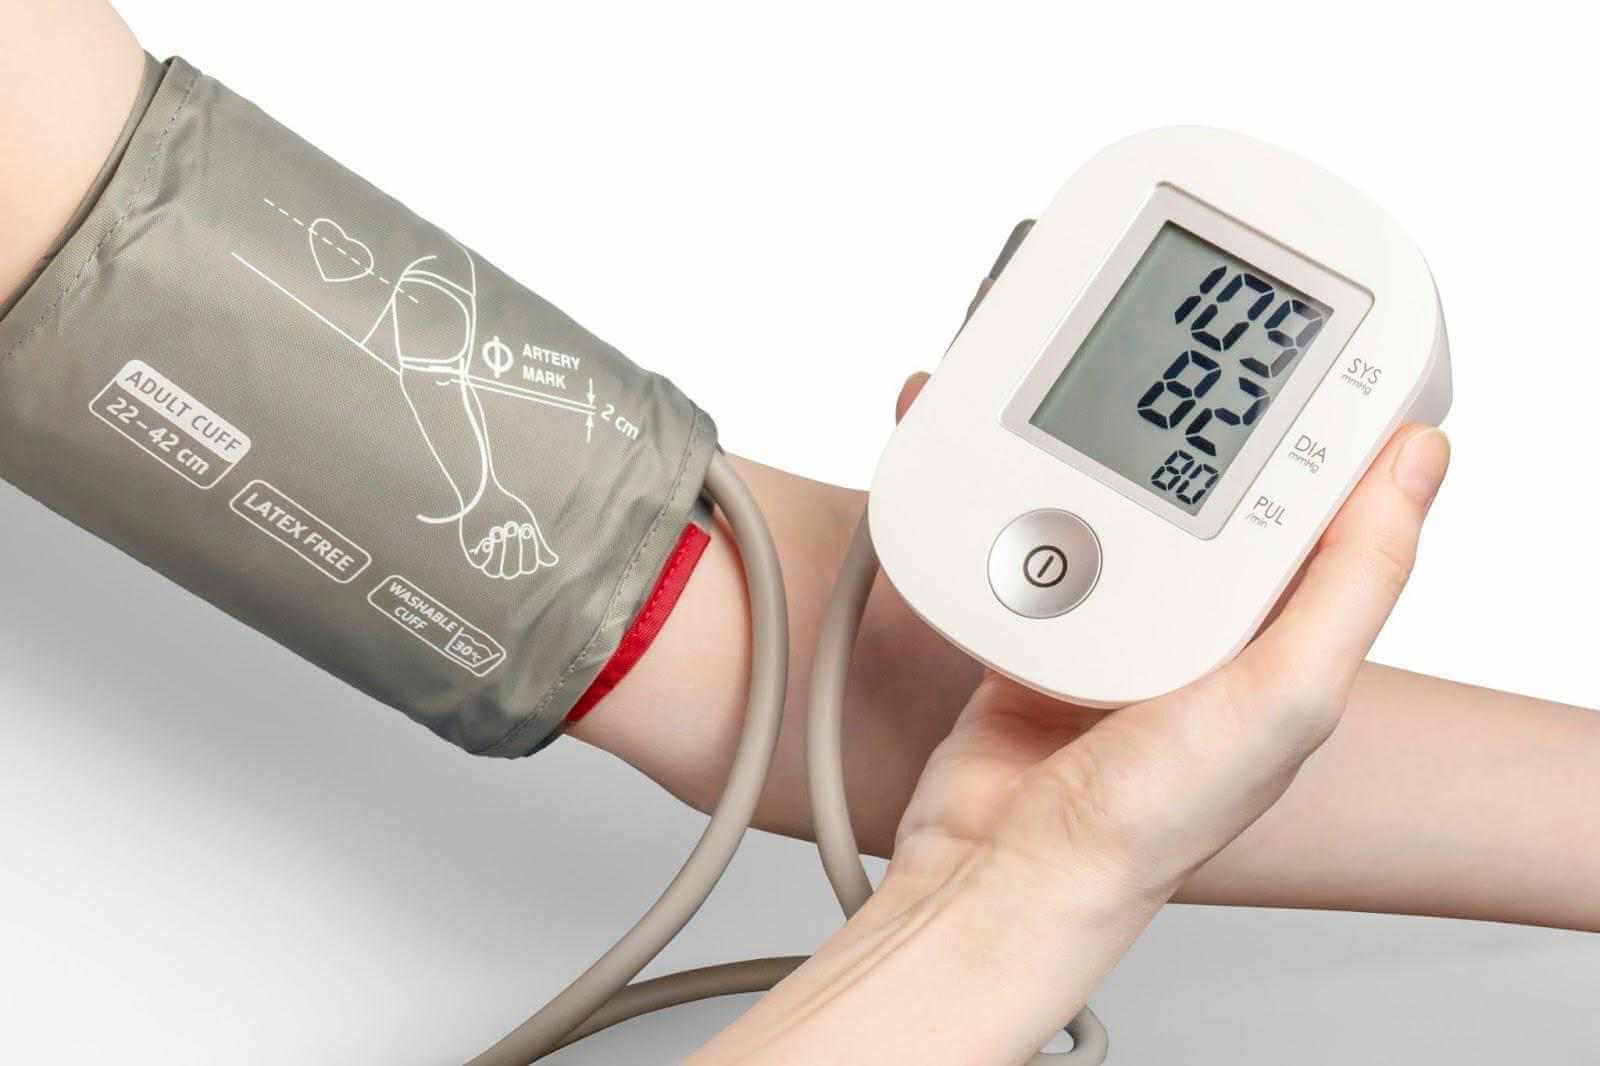 measuring blood pressure